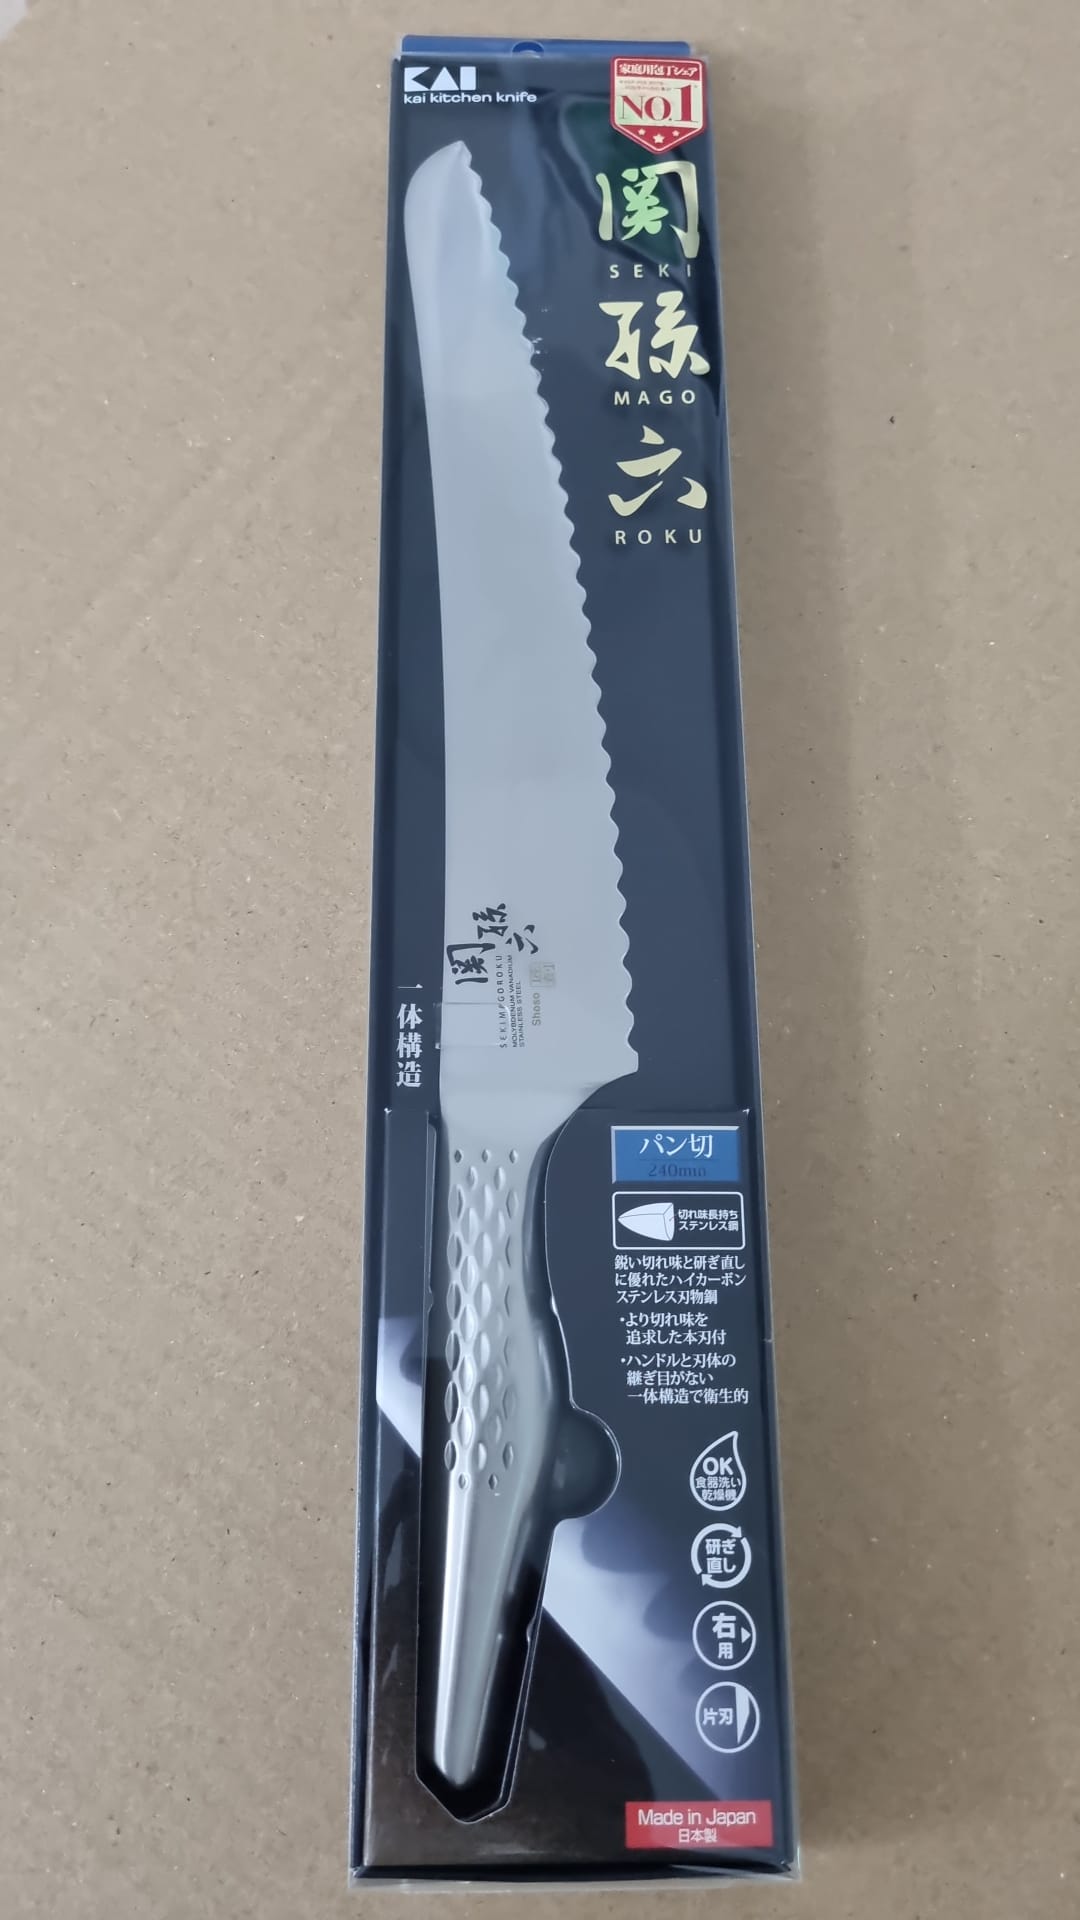 Seki Magoroku Shoso DSR-1K6 Bread Knife 240mm - Made in Japan